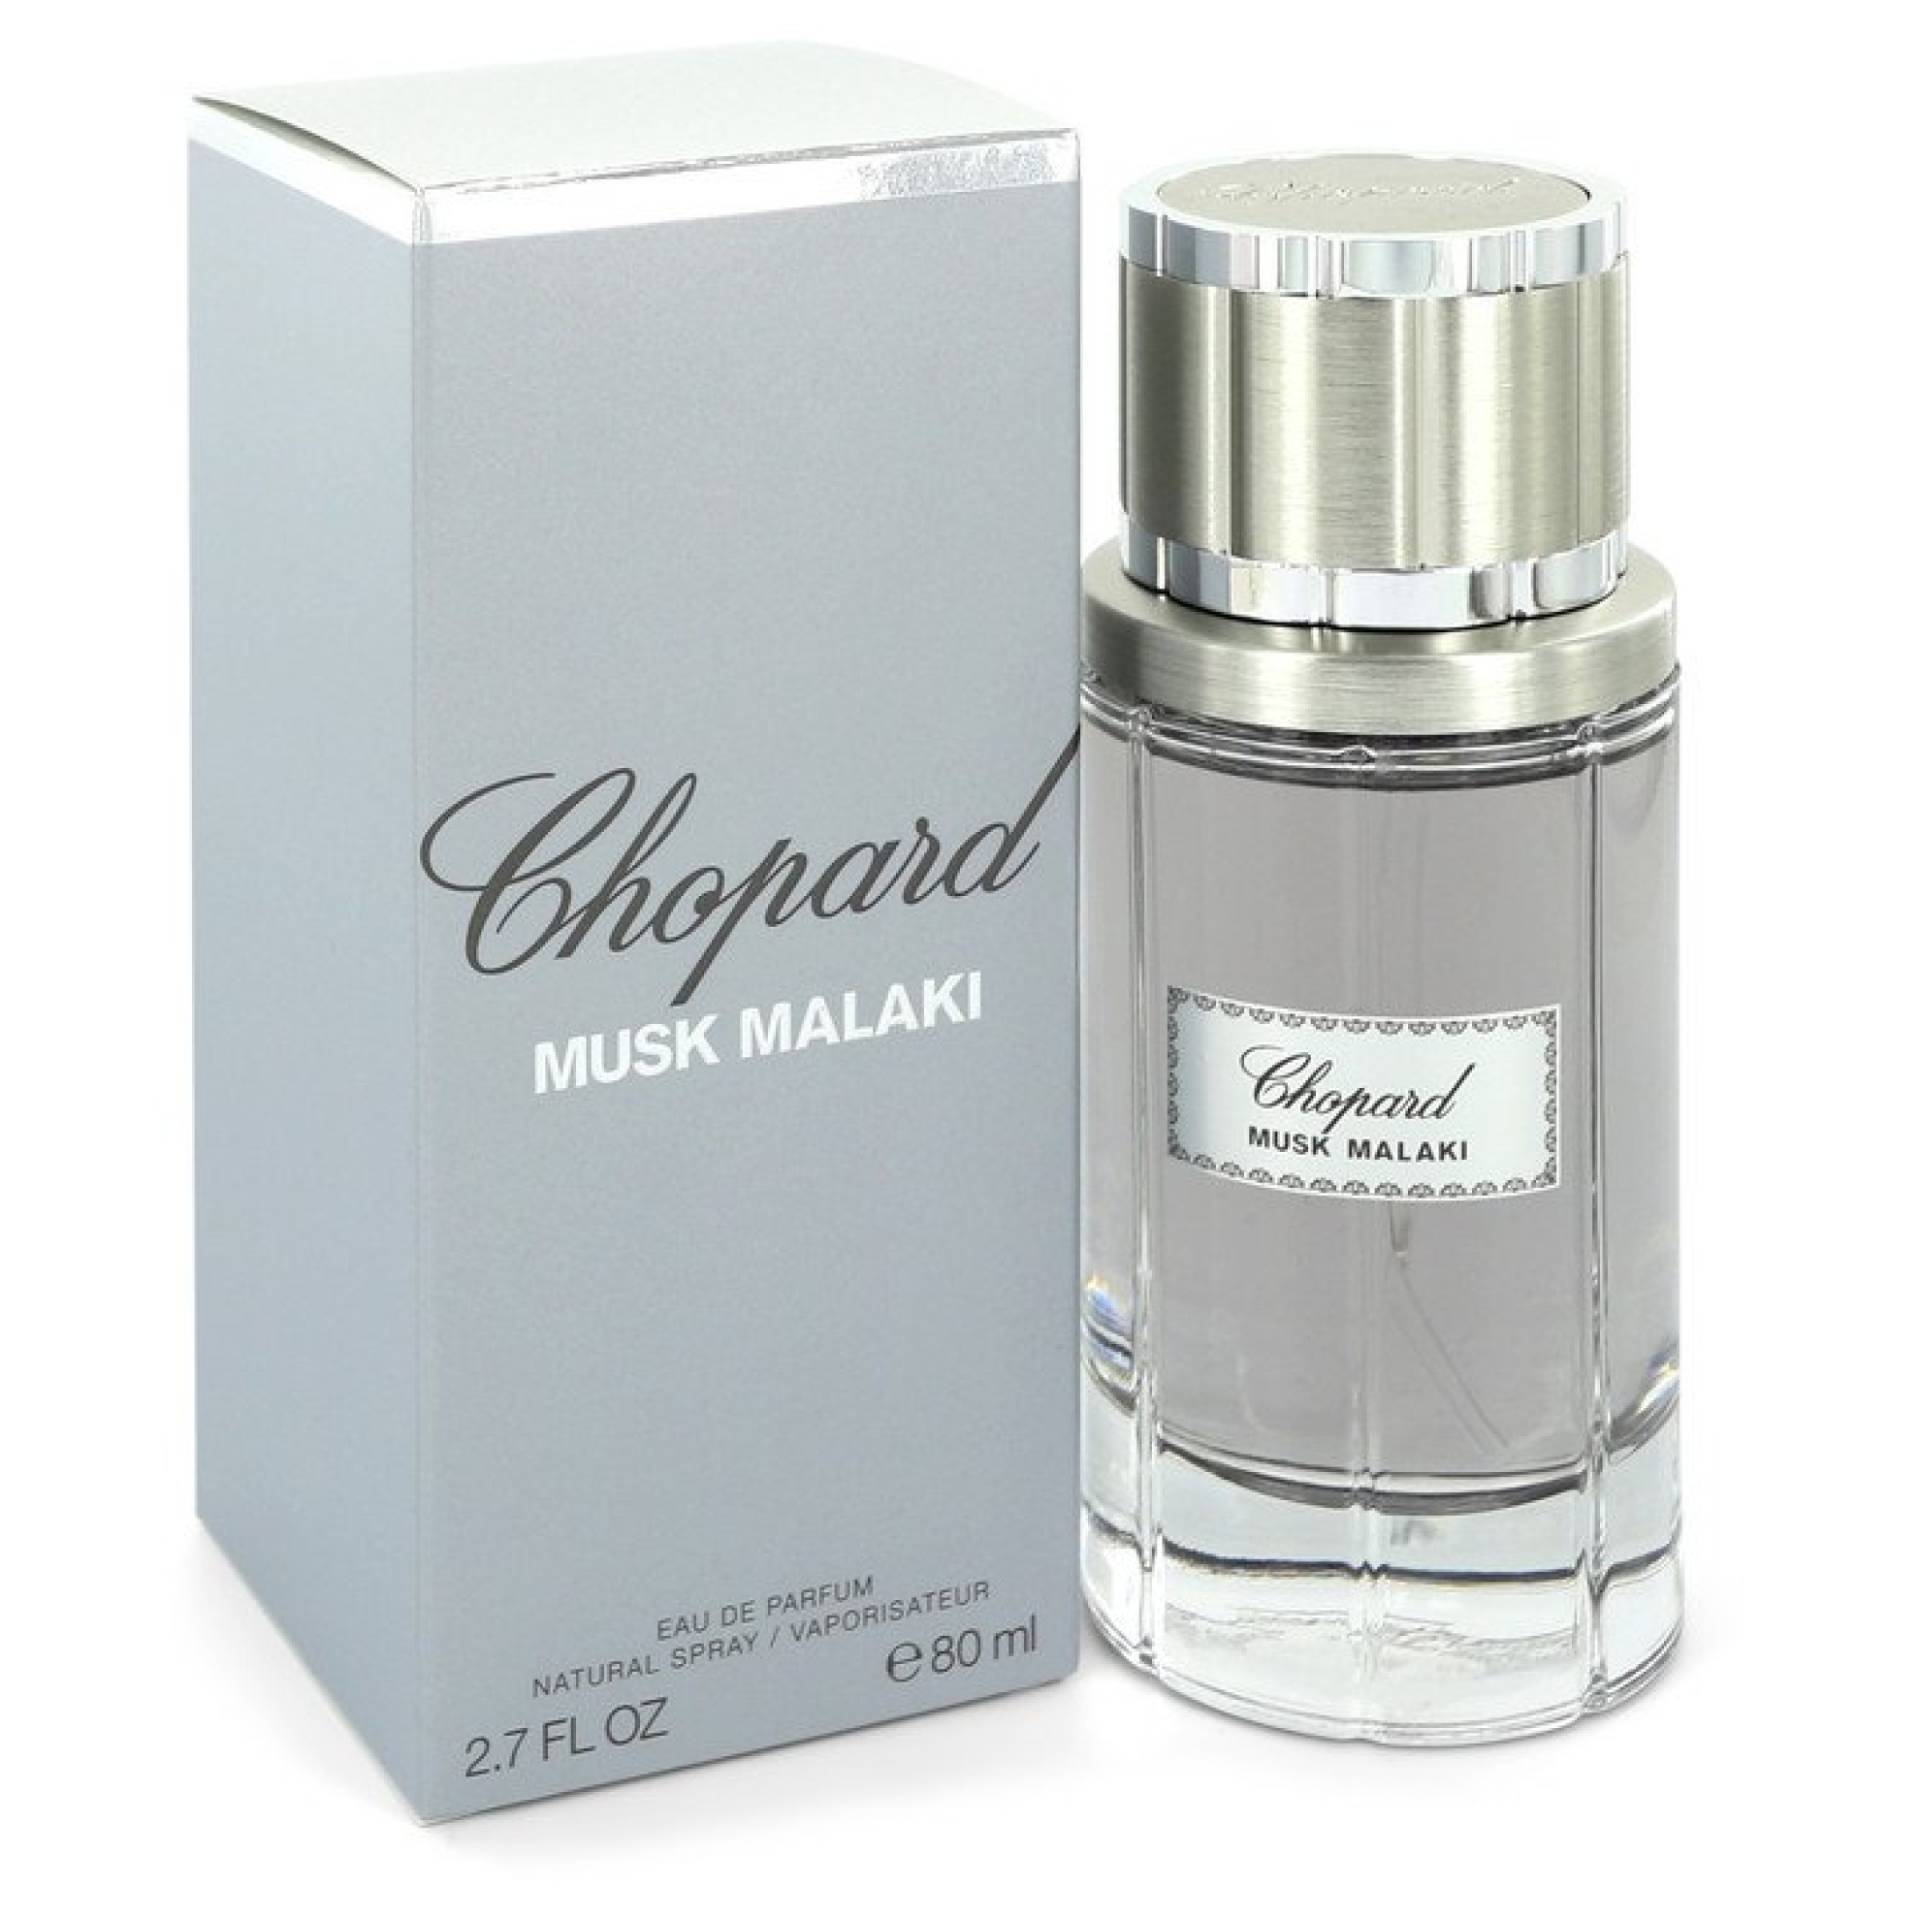 Chopard Musk Malaki Eau De Parfum Spray (Unisex) 80 ml von Chopard